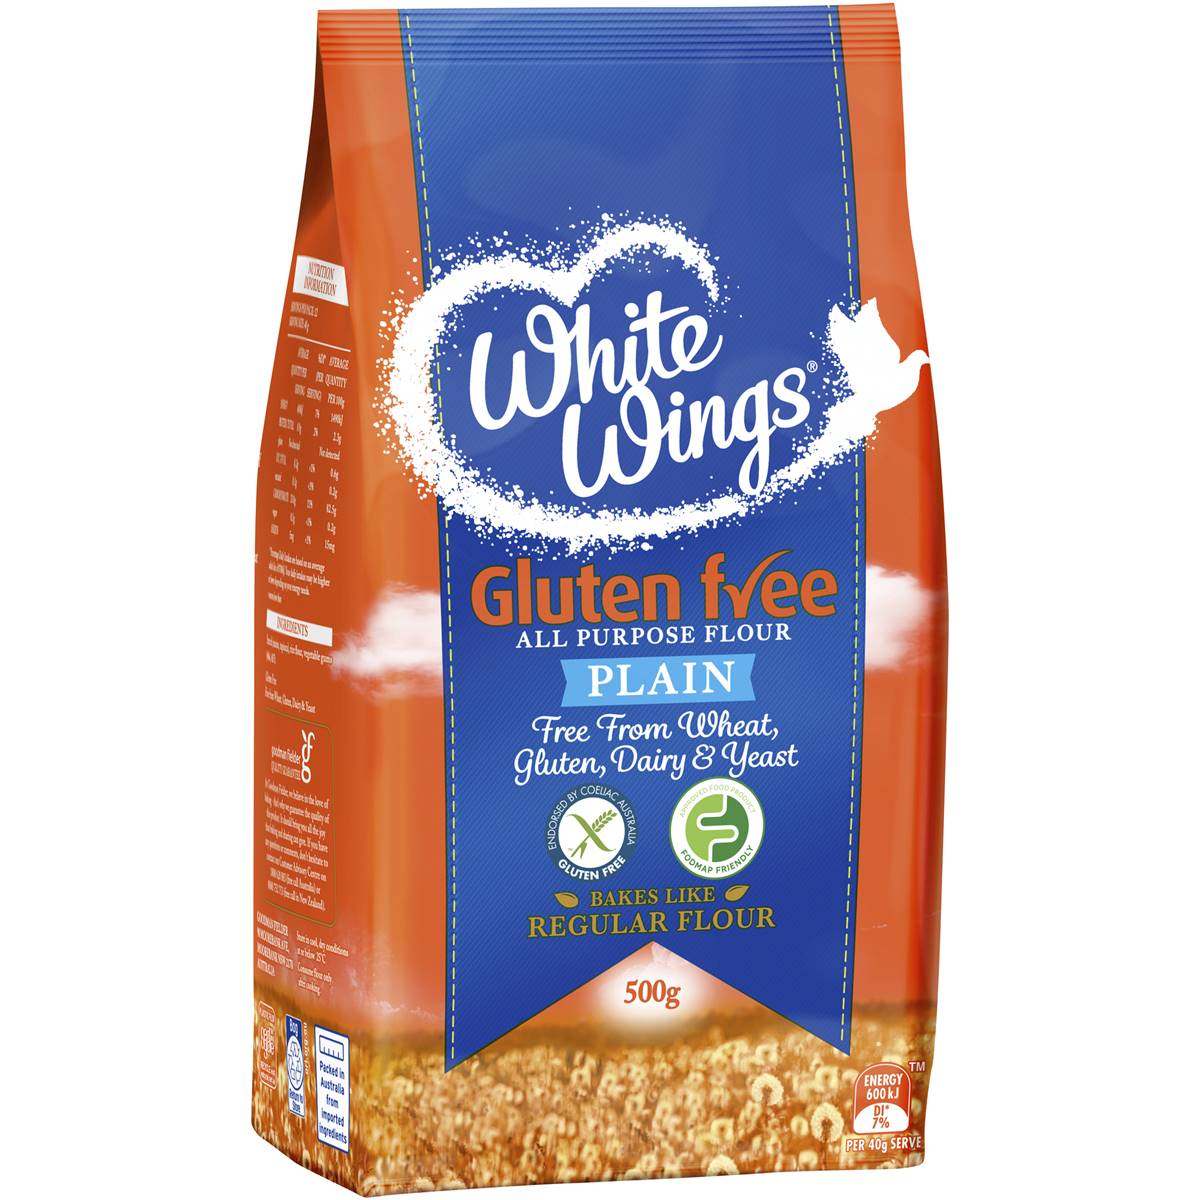 Calories in White Wings Gluten Free Plain Flour